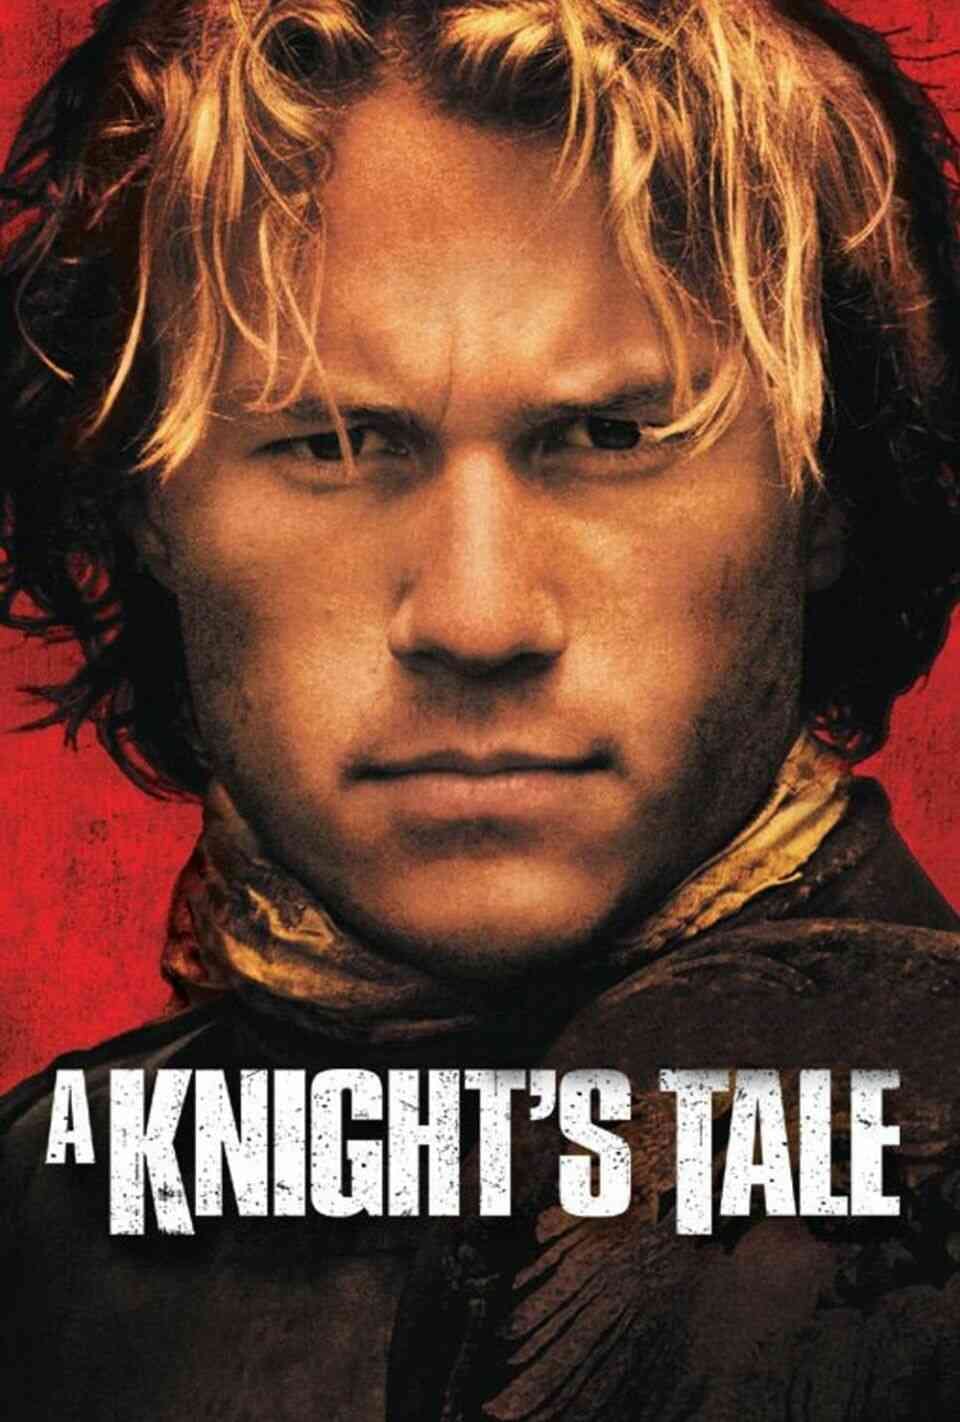 Read A Knight's Tale screenplay (poster)